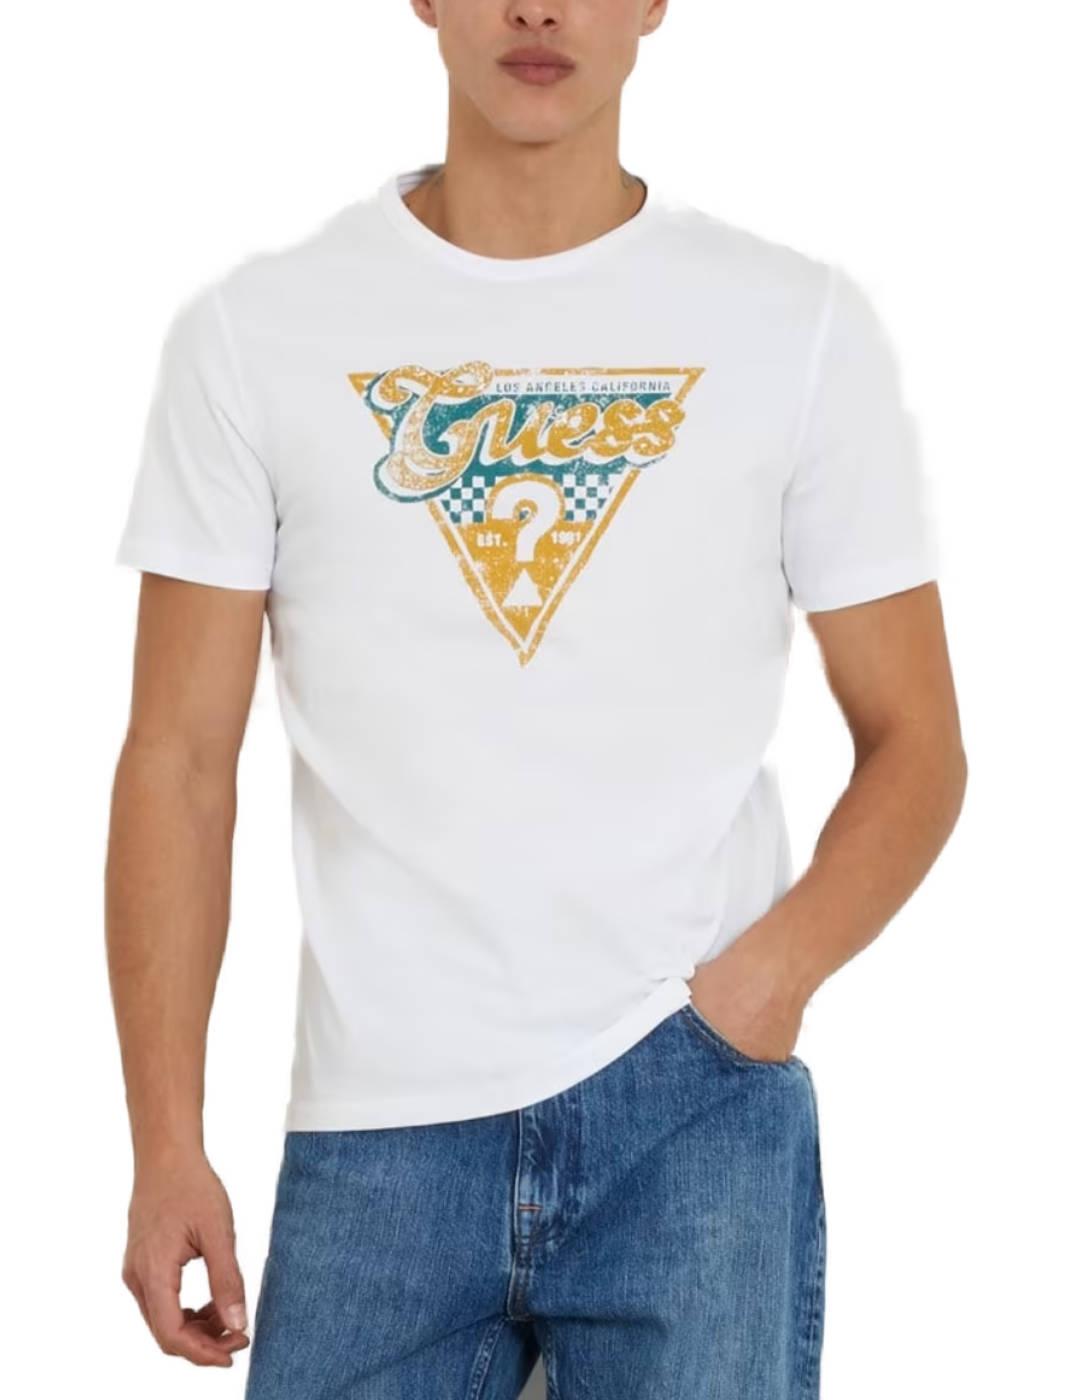 Camiseta Guess Triangle blanca manga corta para hombre